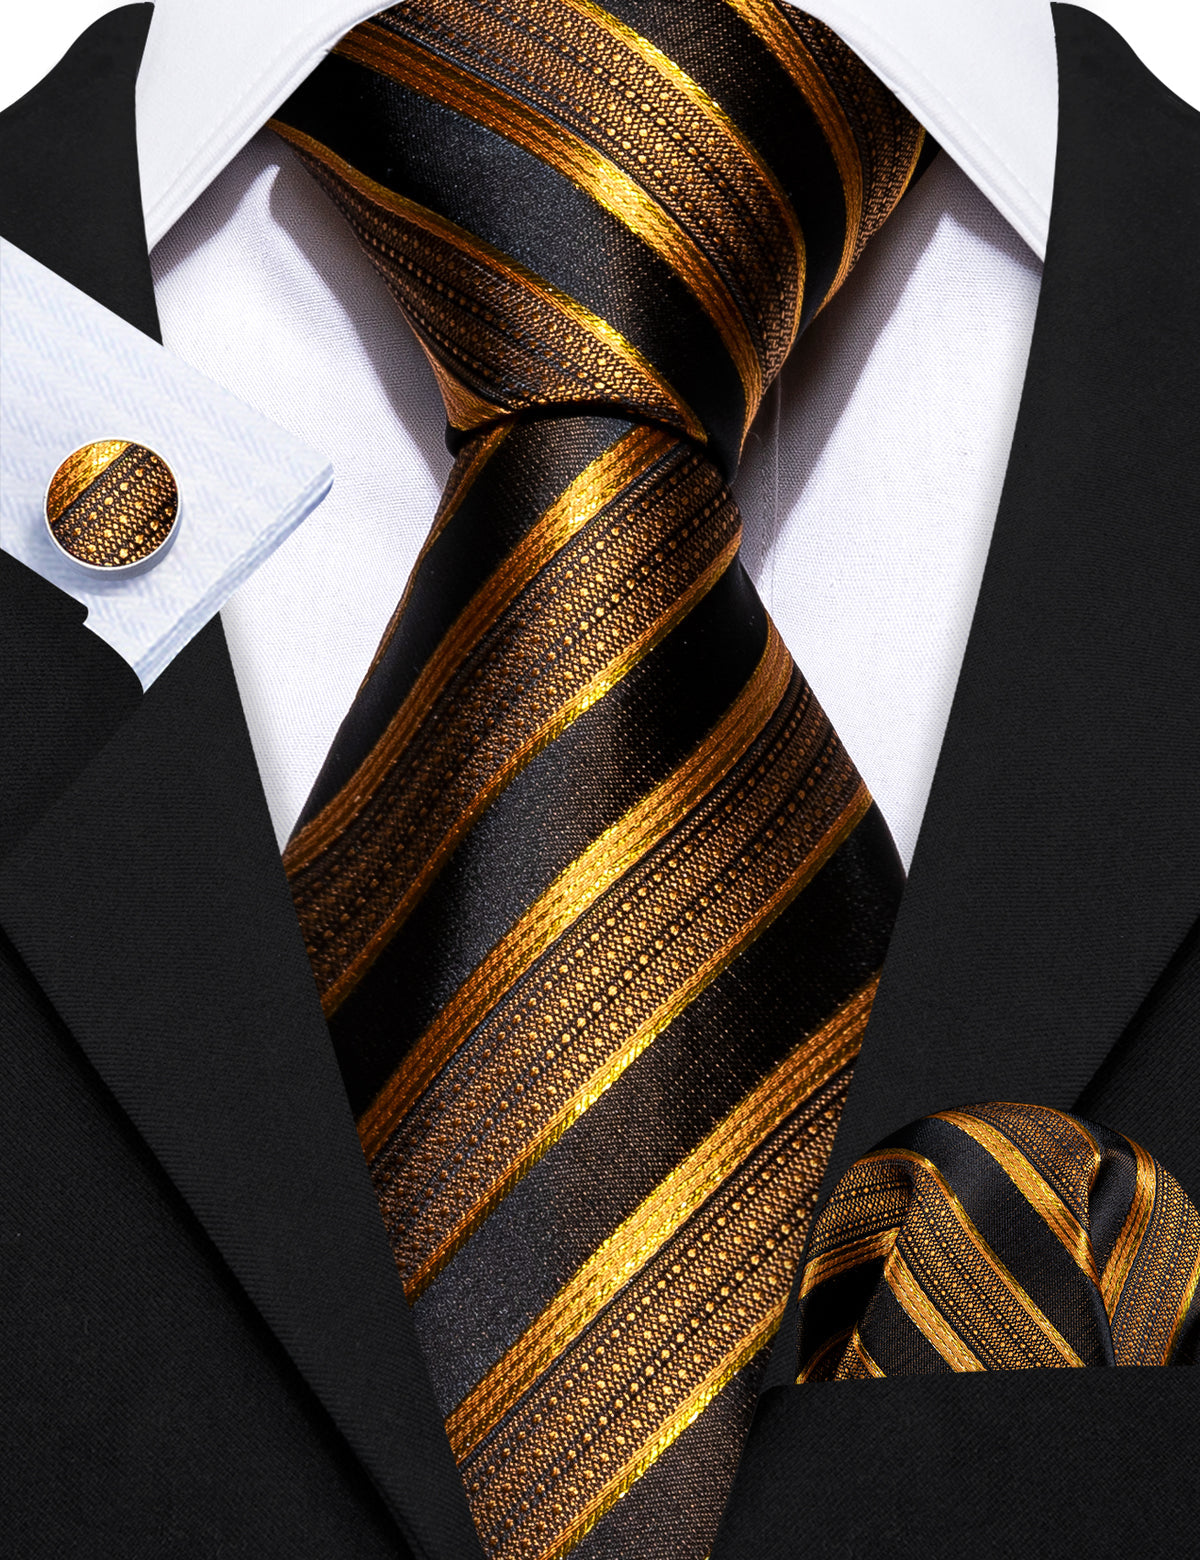 Men’s Silk Coordinated Tie Set - Gold with Black Stripes (5702)